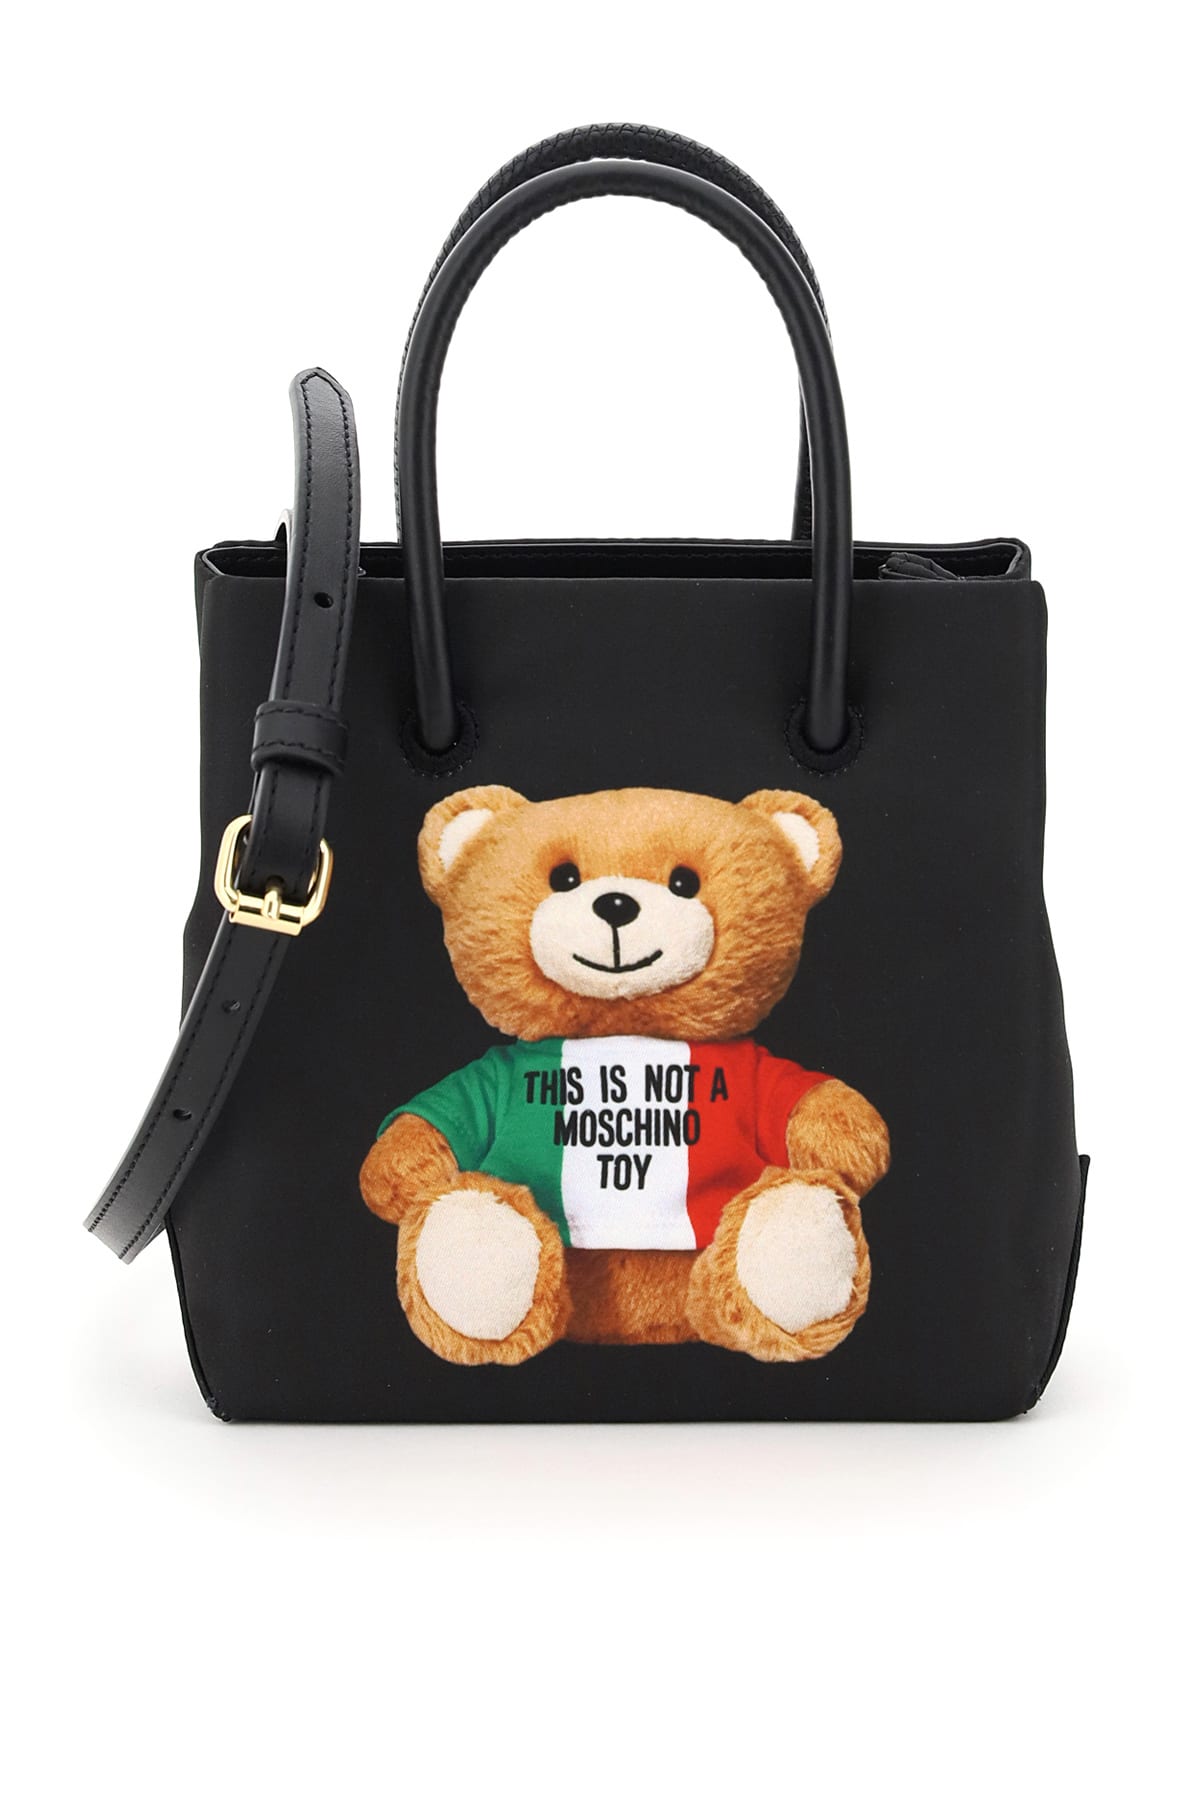 Moschino Mini Tote Bag With Italian Teddy Bear Print Iicf